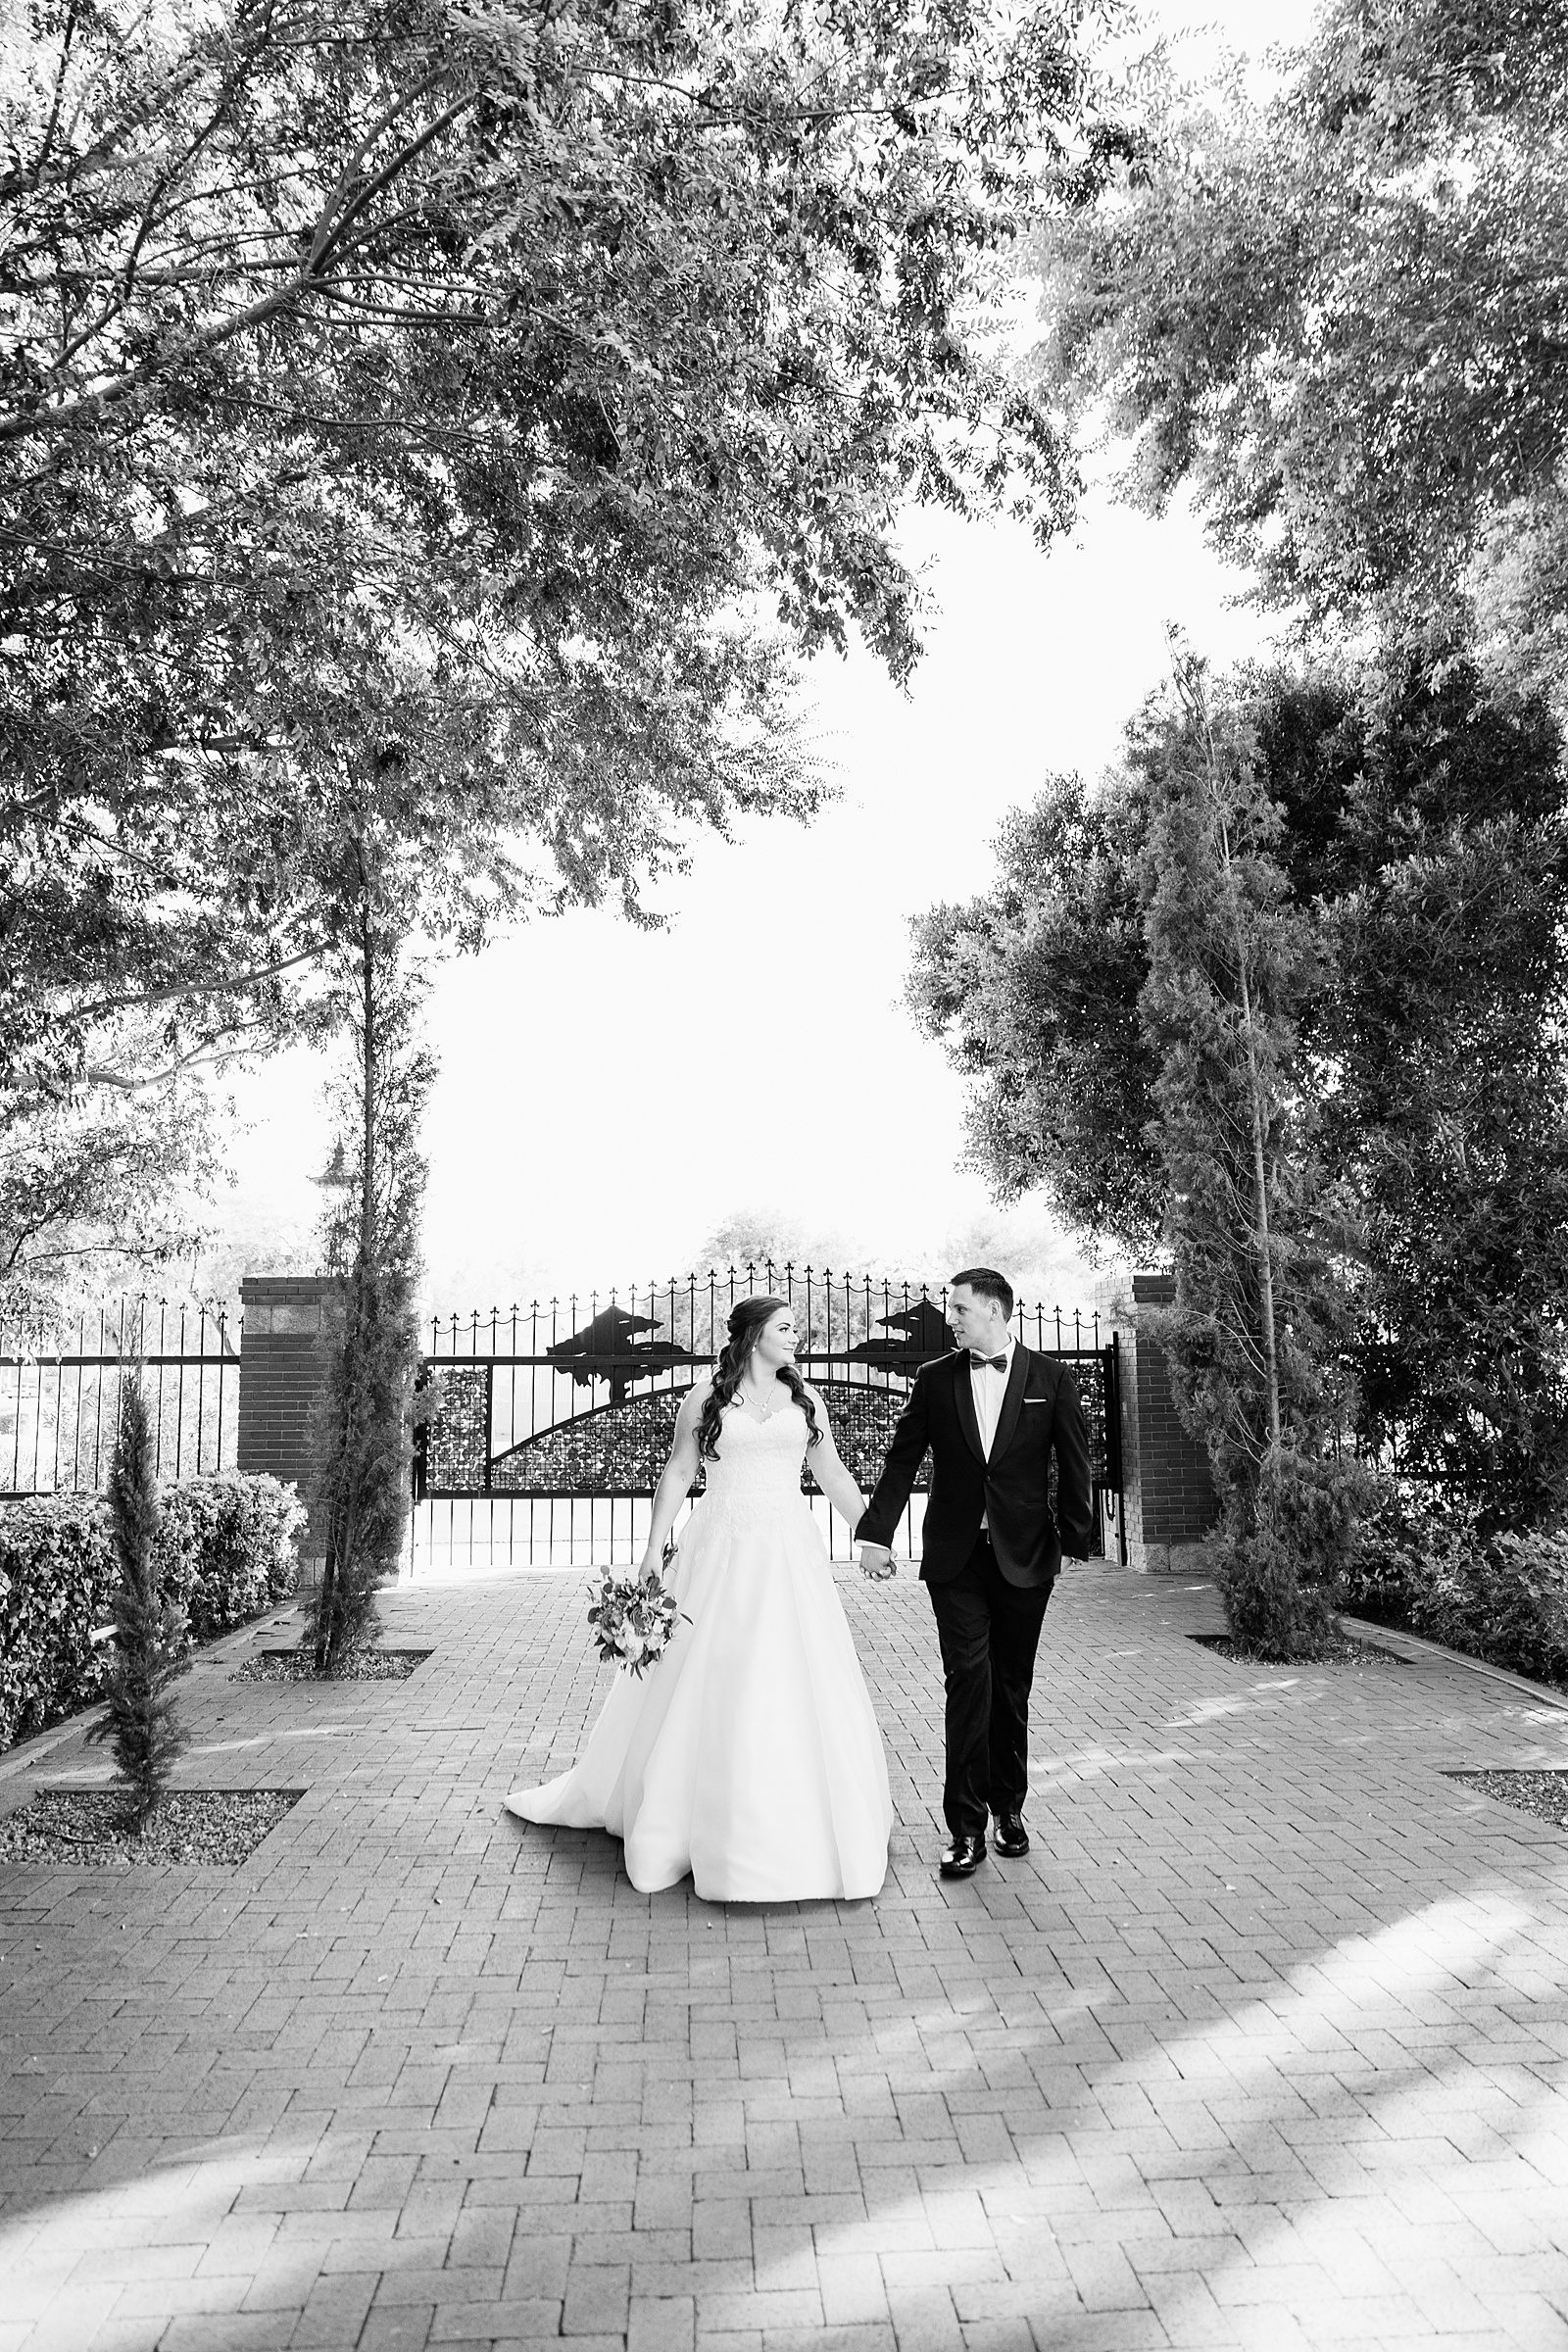 Bride and groom walking together during their Stonebridge Manor wedding by Arizona wedding photographer PMA Photography.